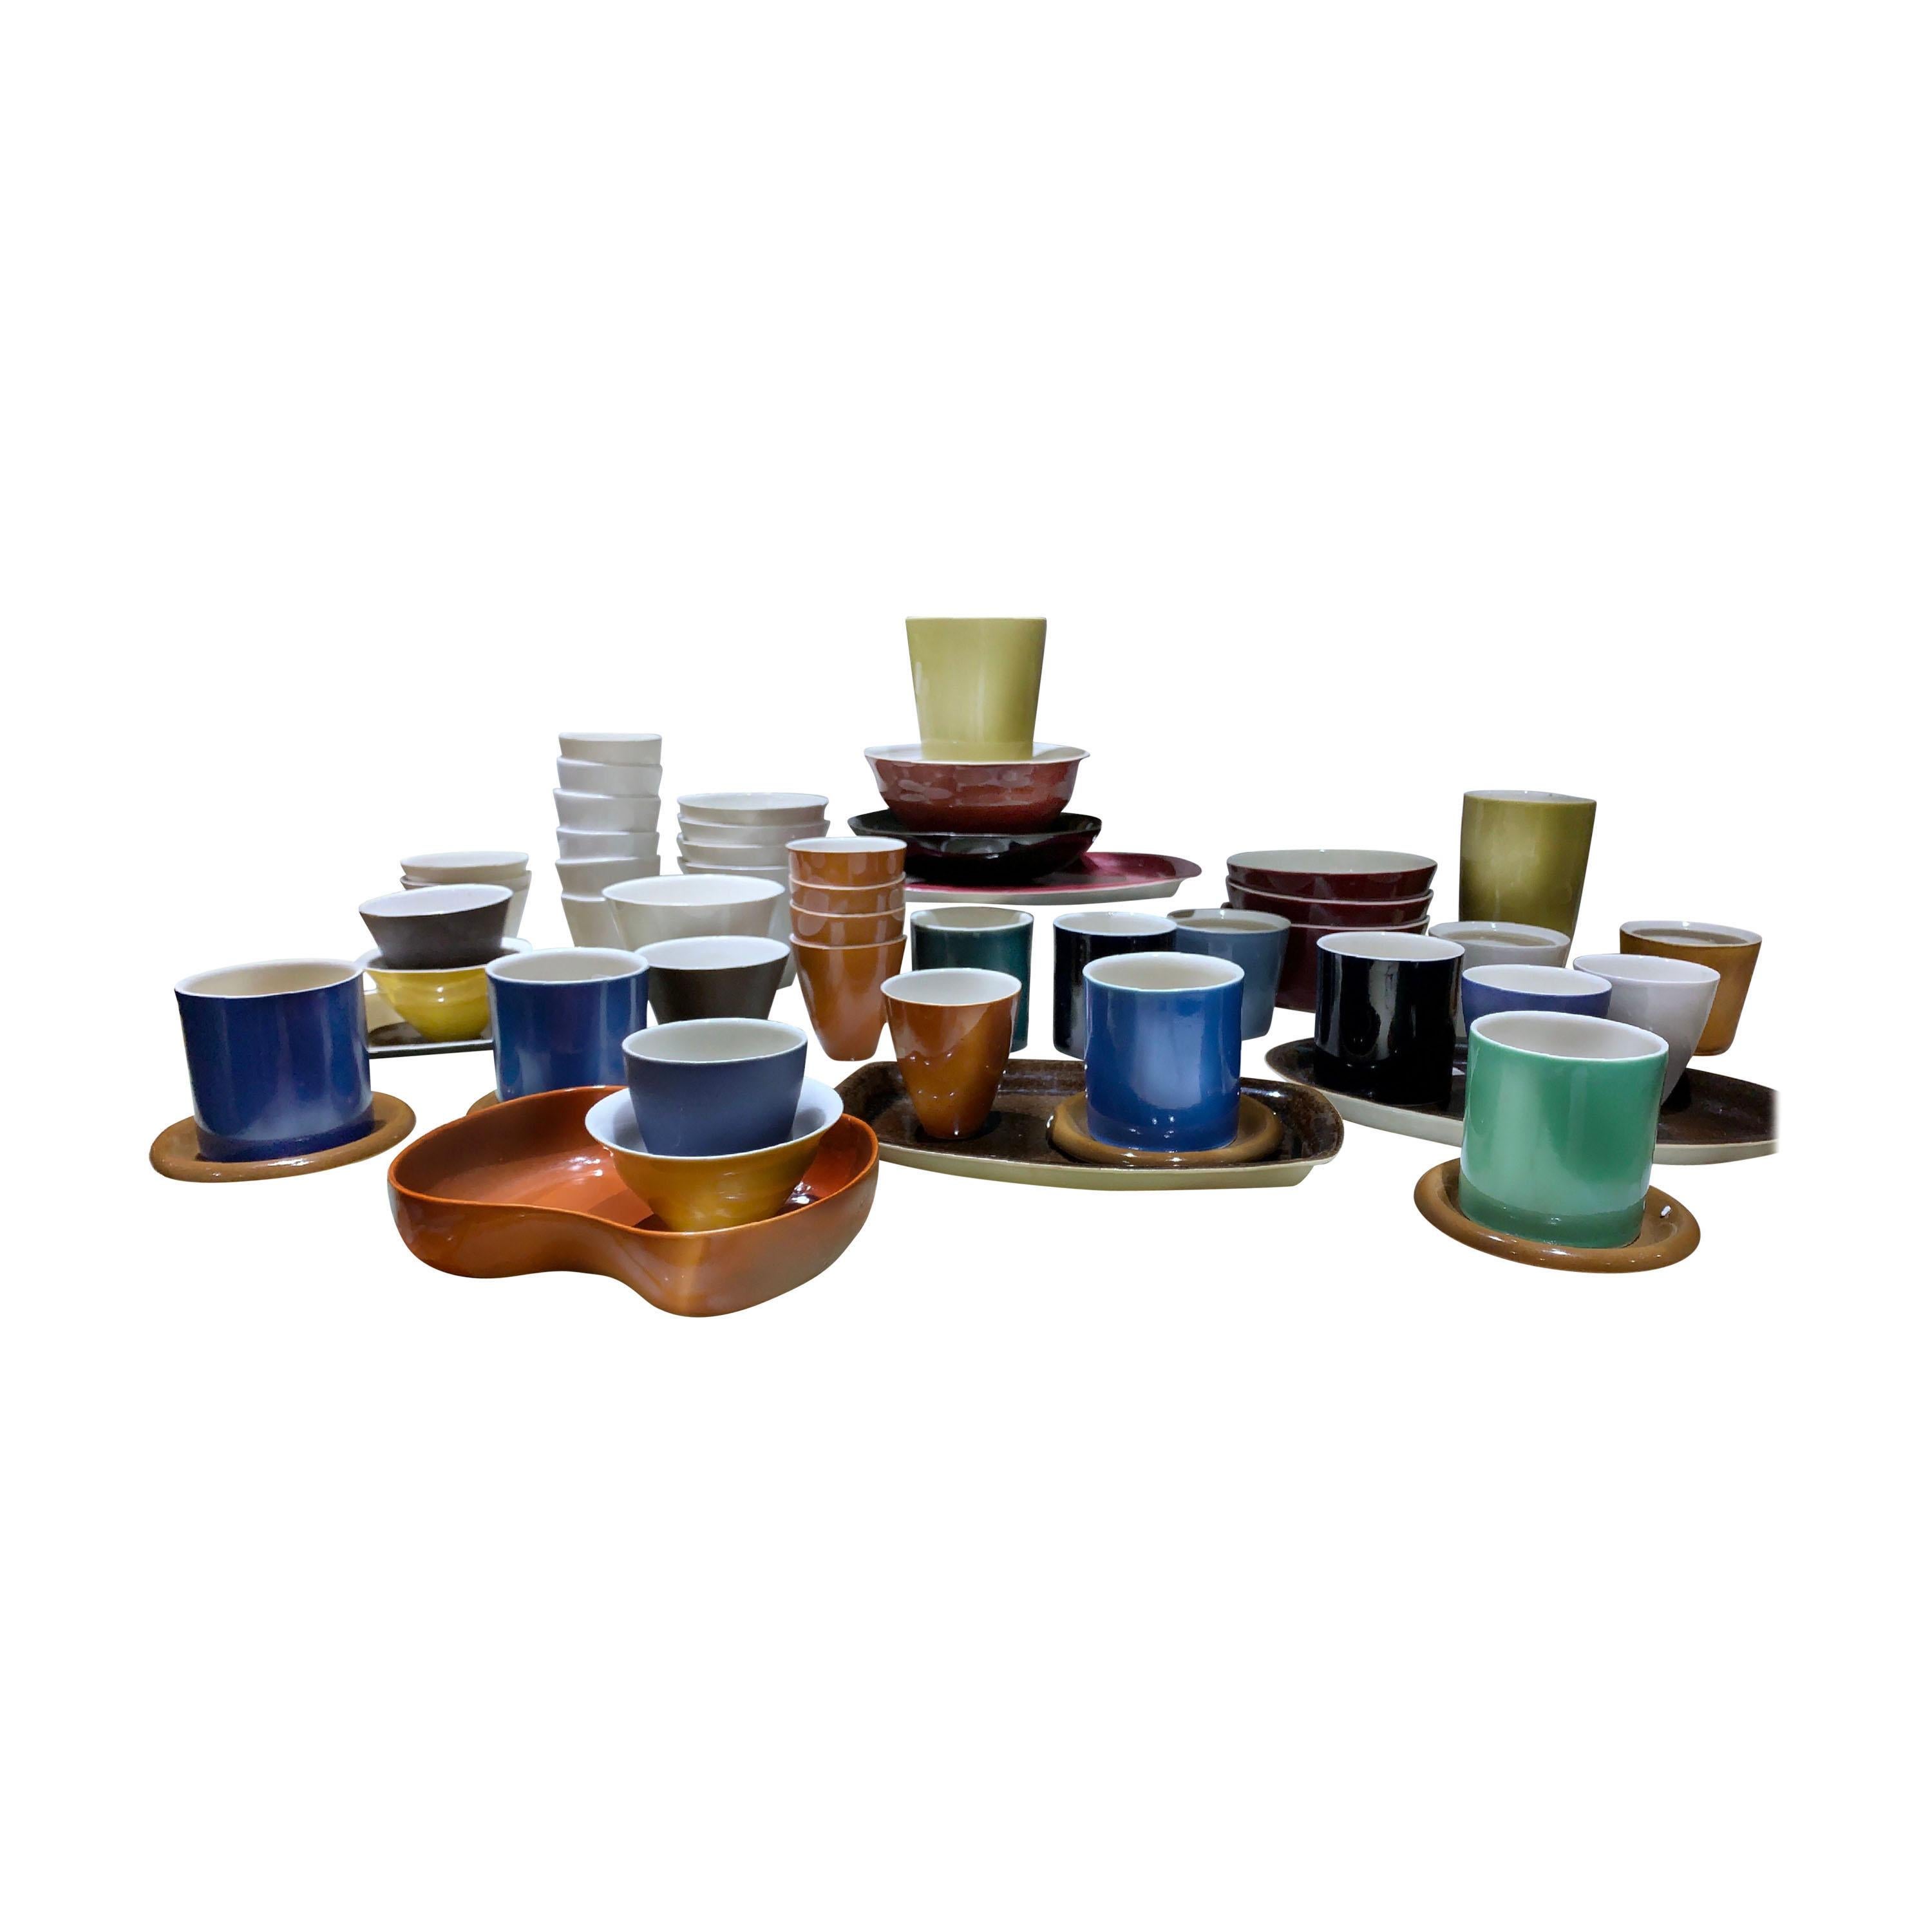 Lietzke Studio Porcelain Tableware Set, Midcentury Modern Art Pottery Ceramics